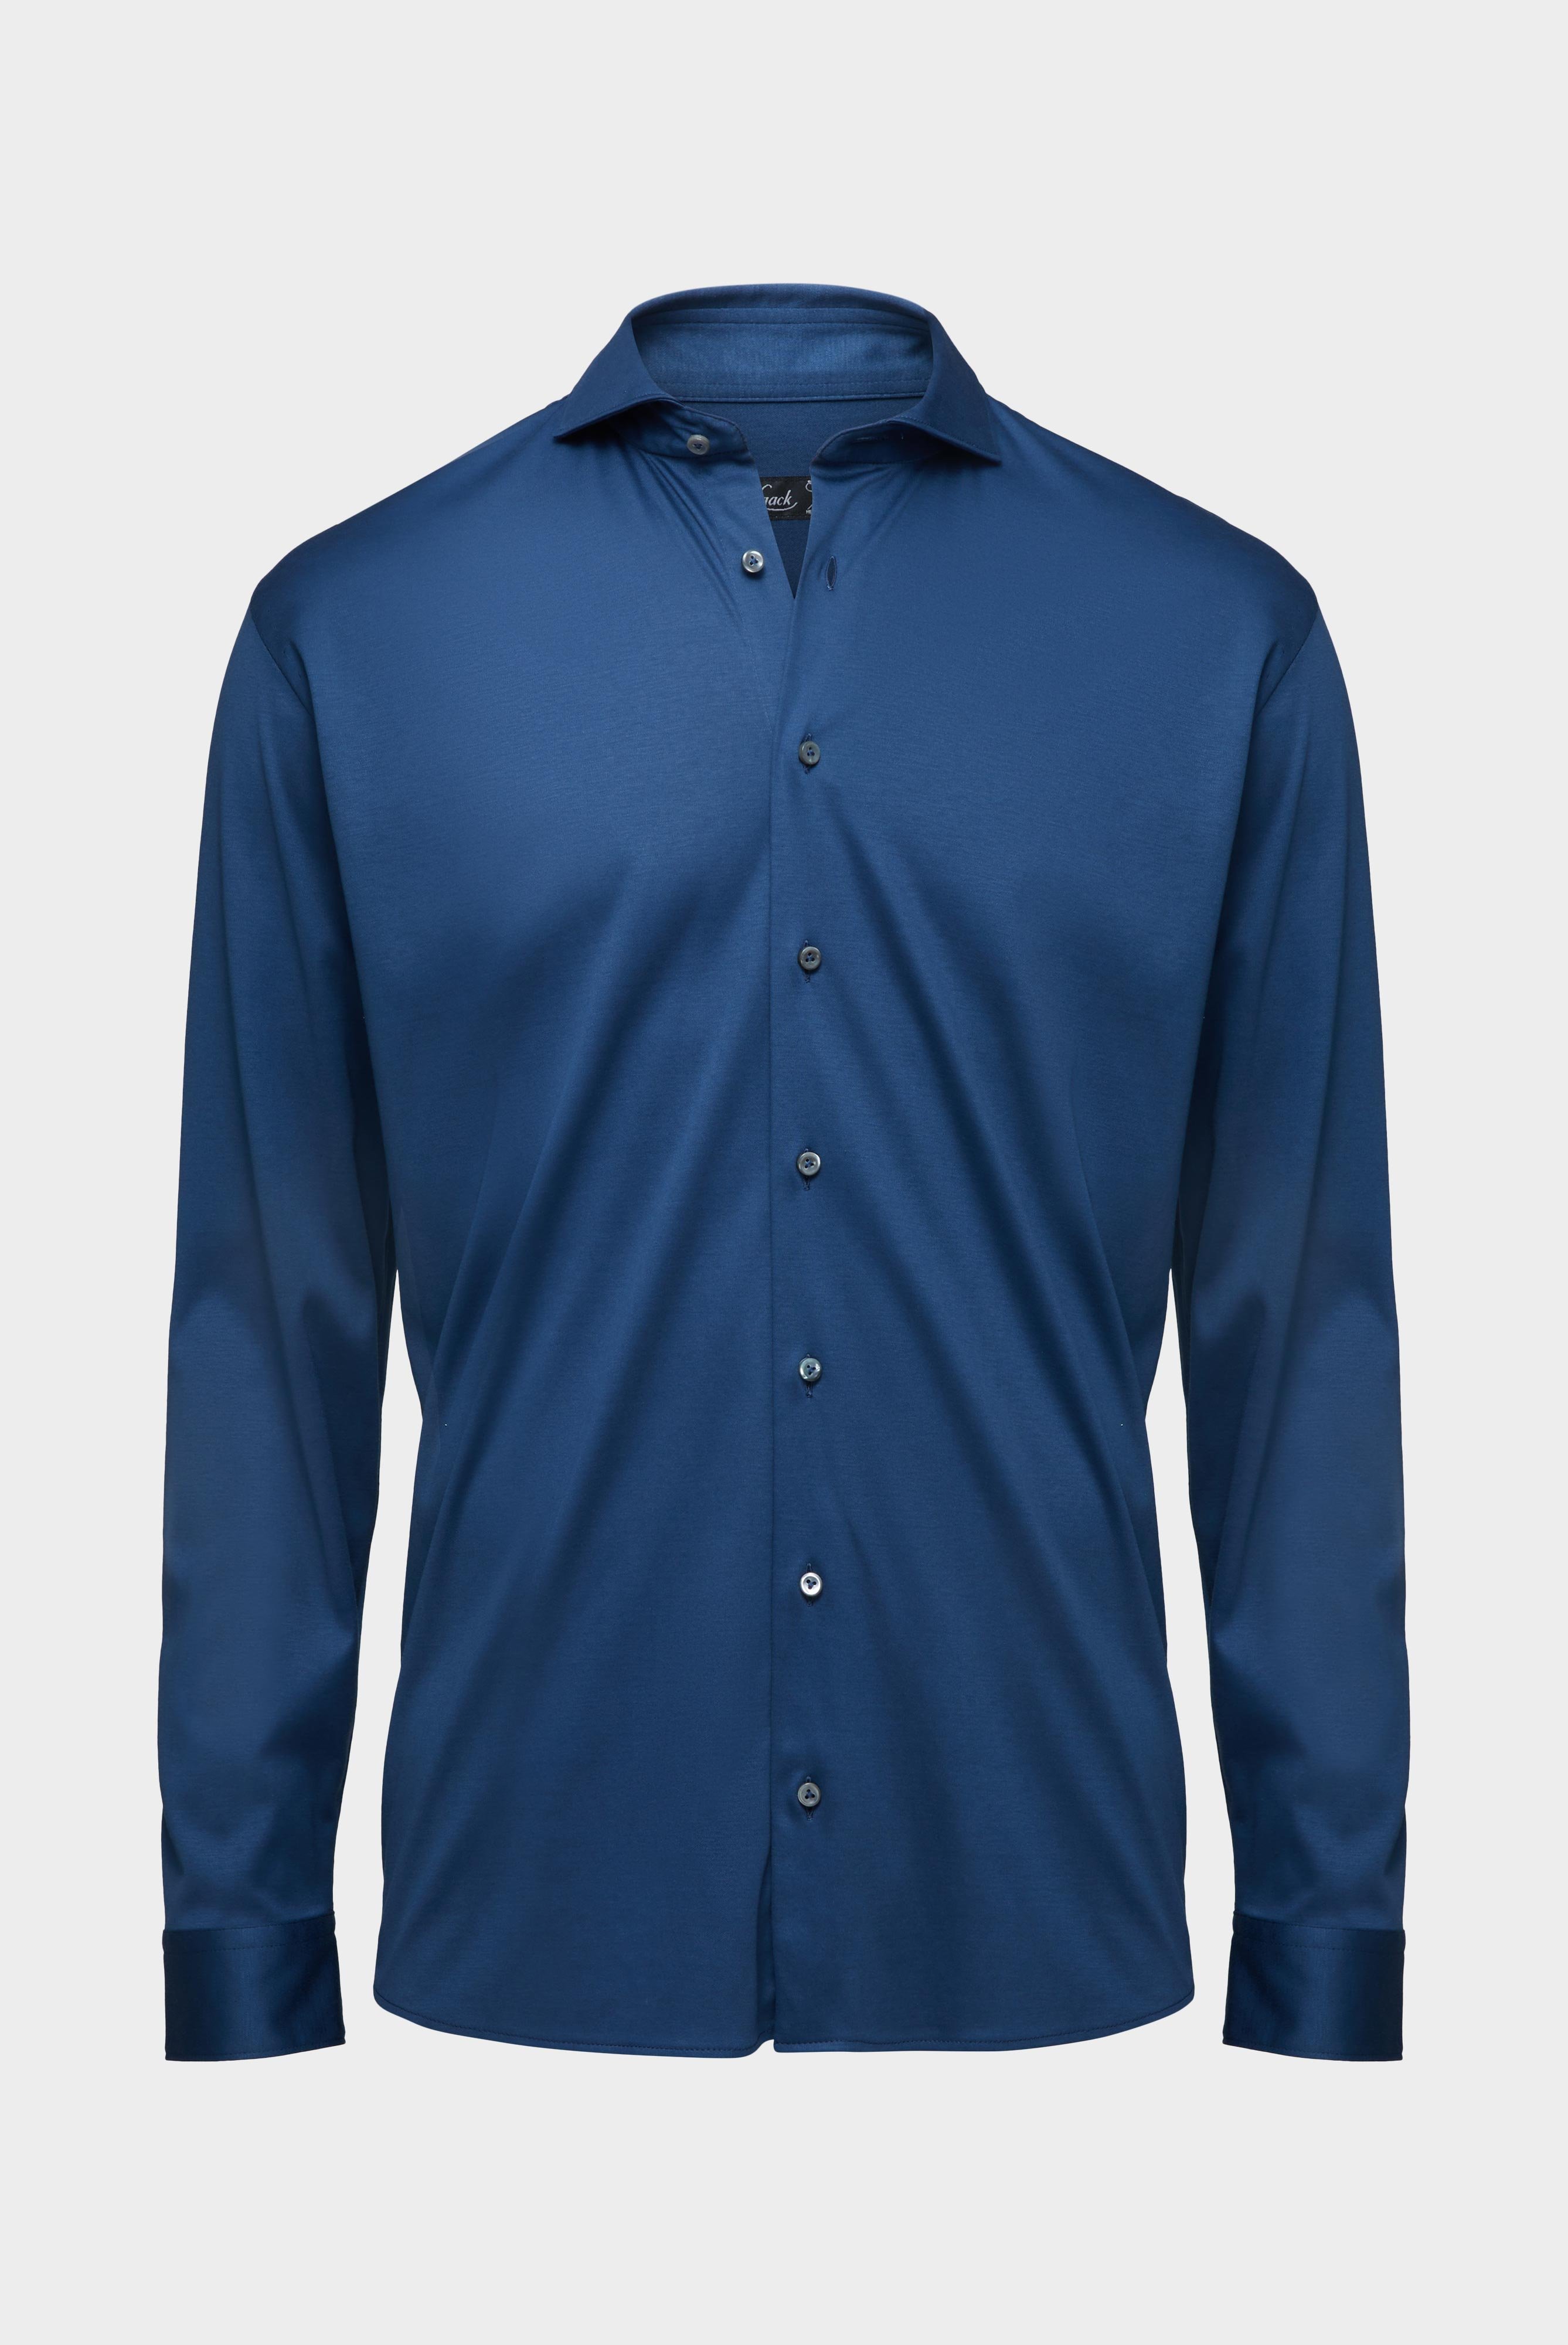 Casual Hemden+Jersey Hemd aus Schweizer Baumwolle Tailor Fit+20.1683.UC.180031.780.XL